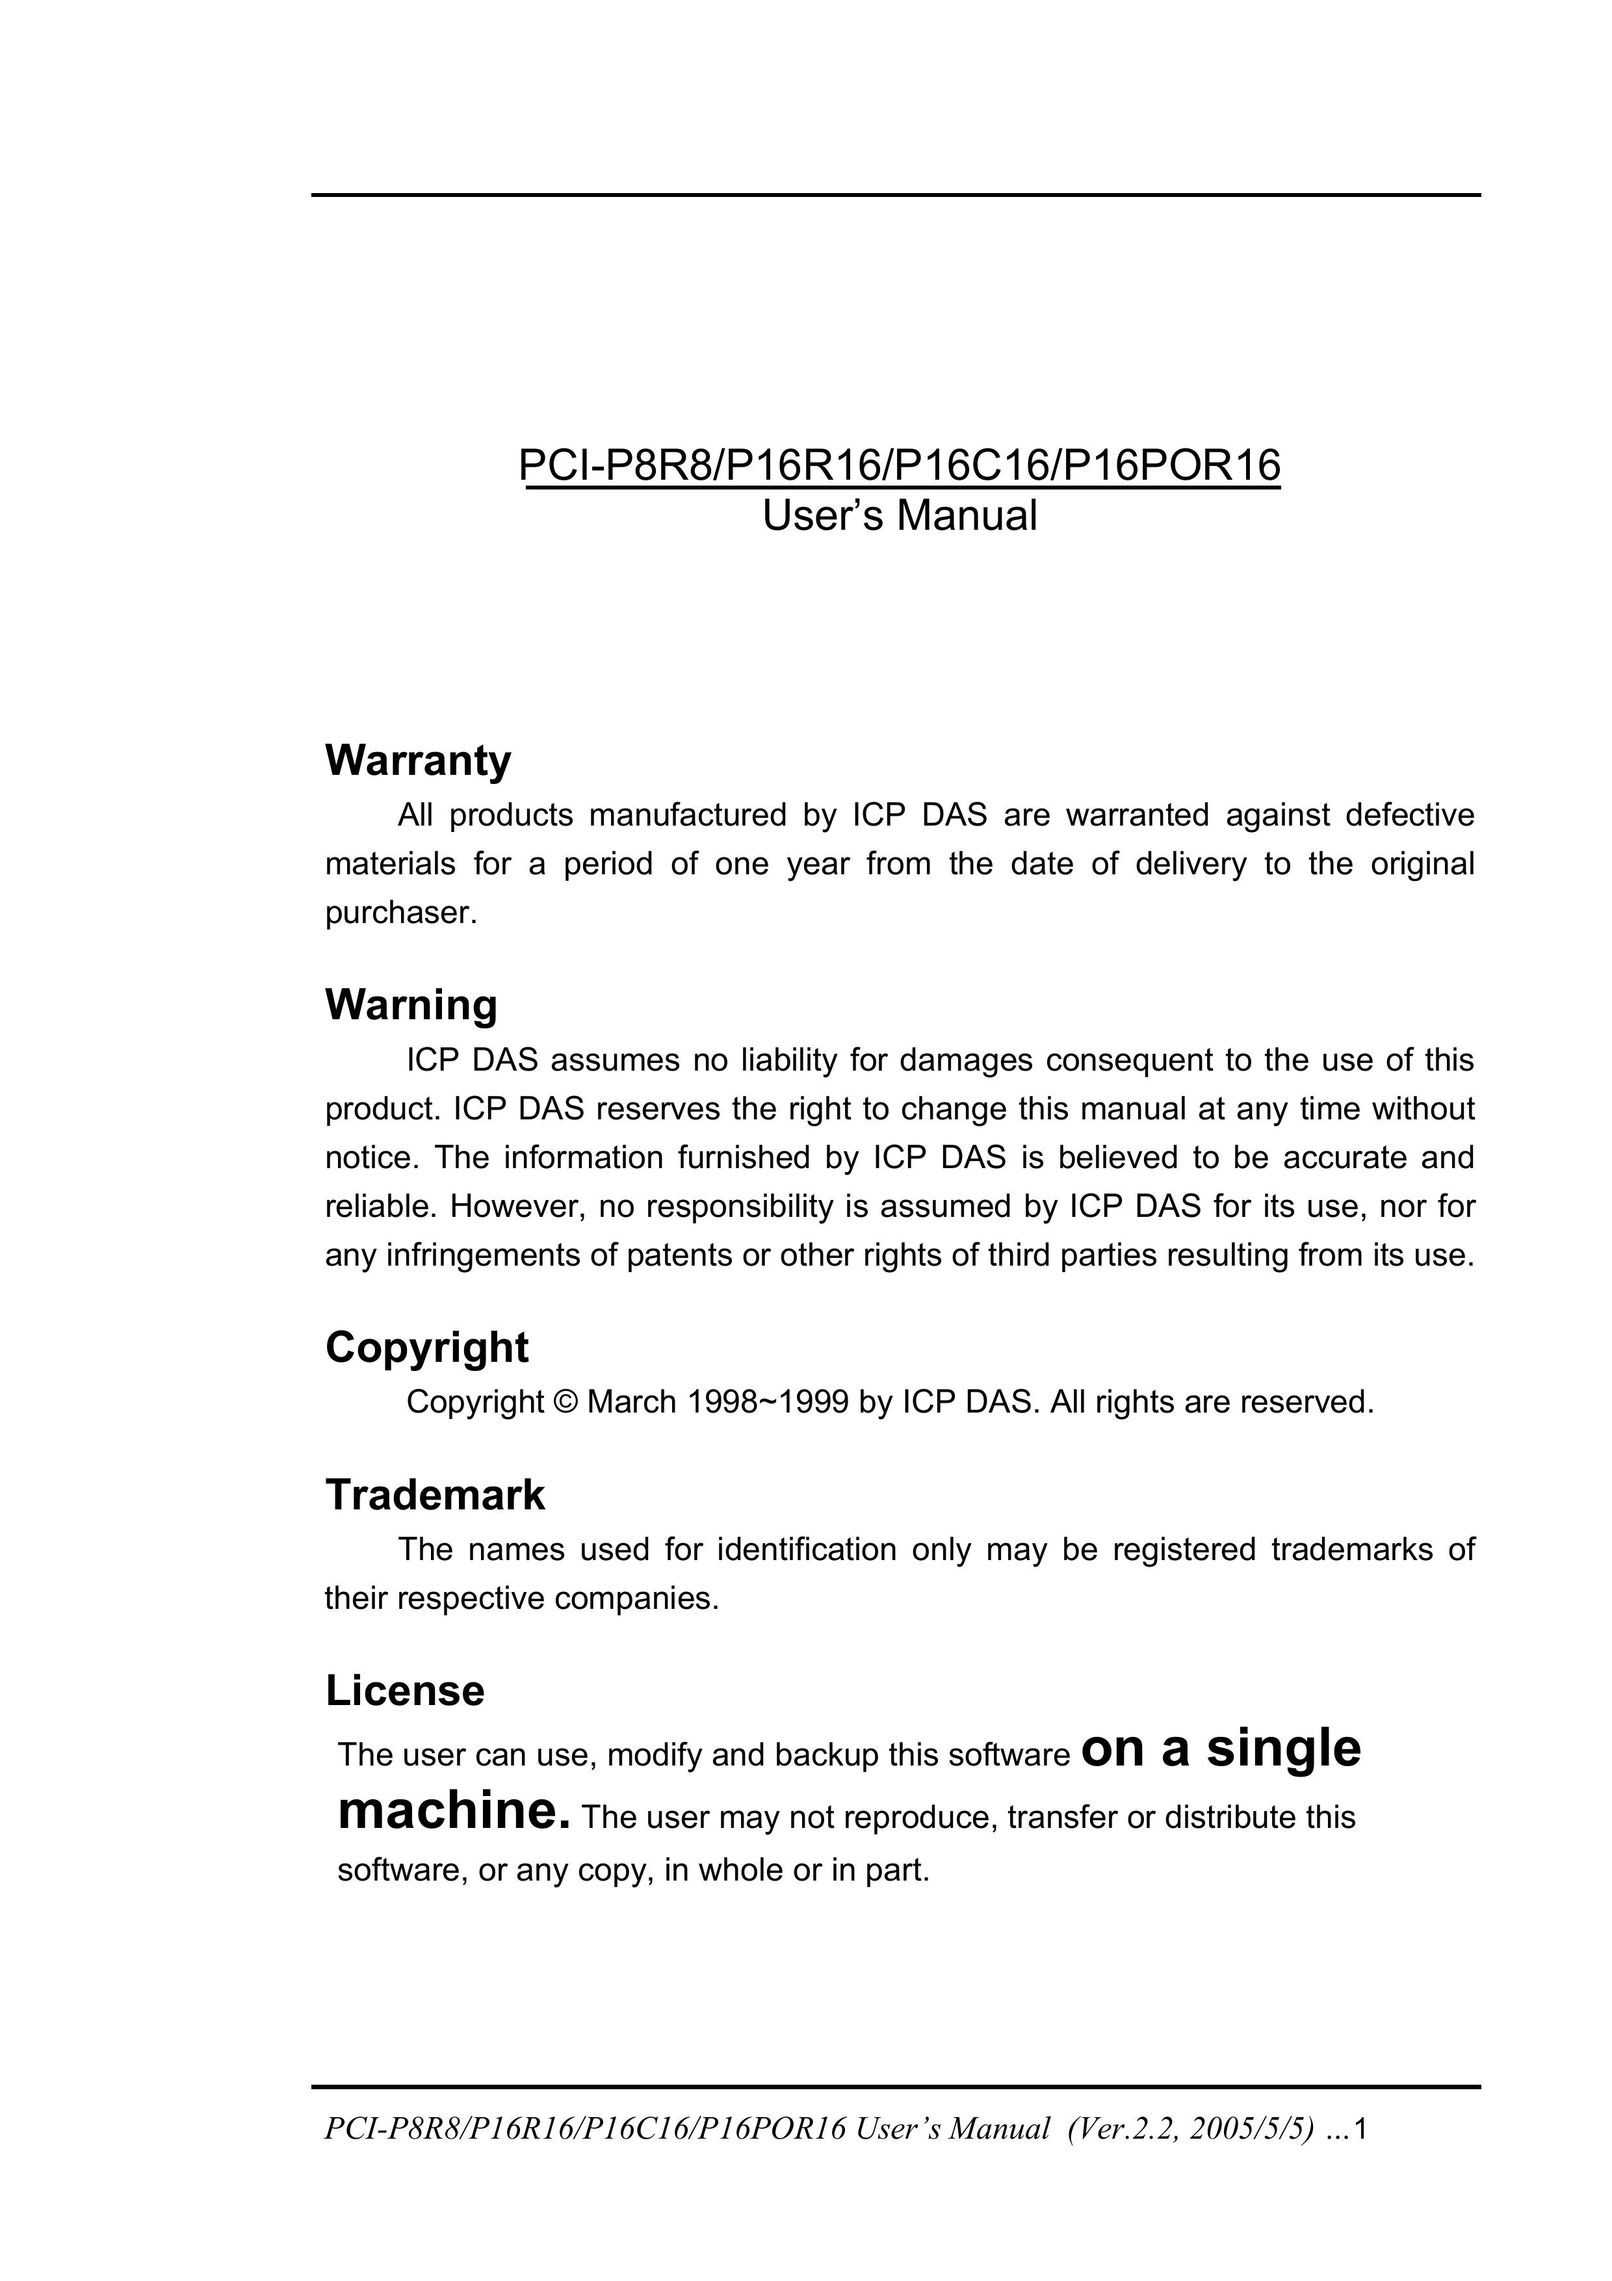 ICP DAS USA PCI-P16C16 Computer Hardware User Manual